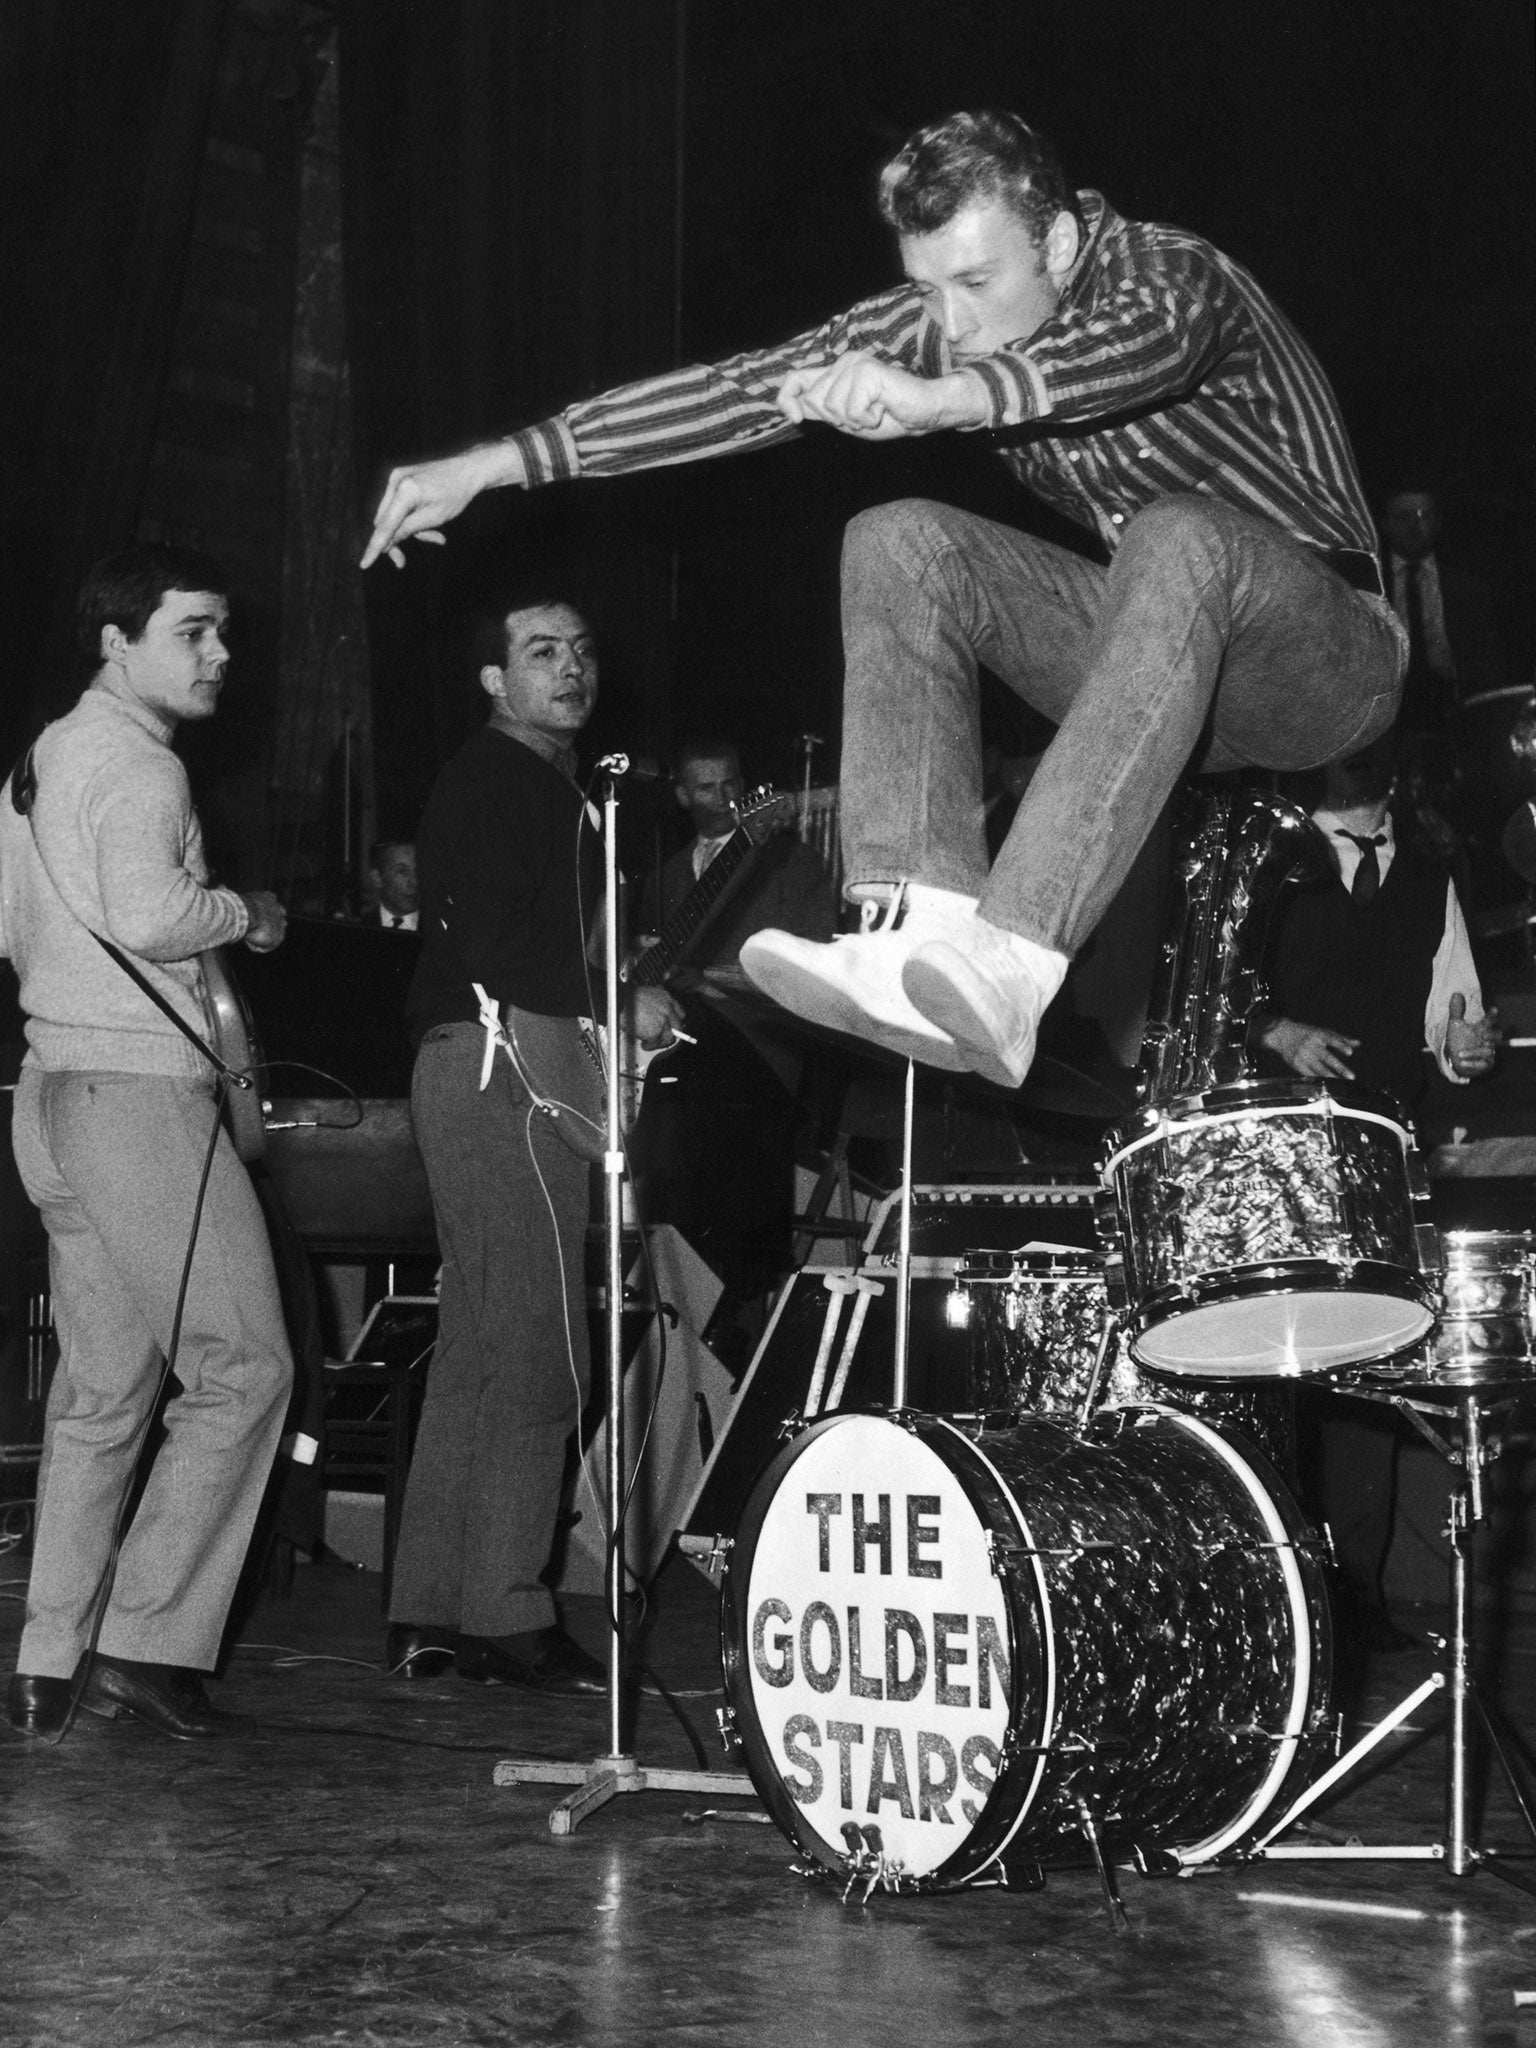 Johnny Hallyday: The story of a French rock phenomenon